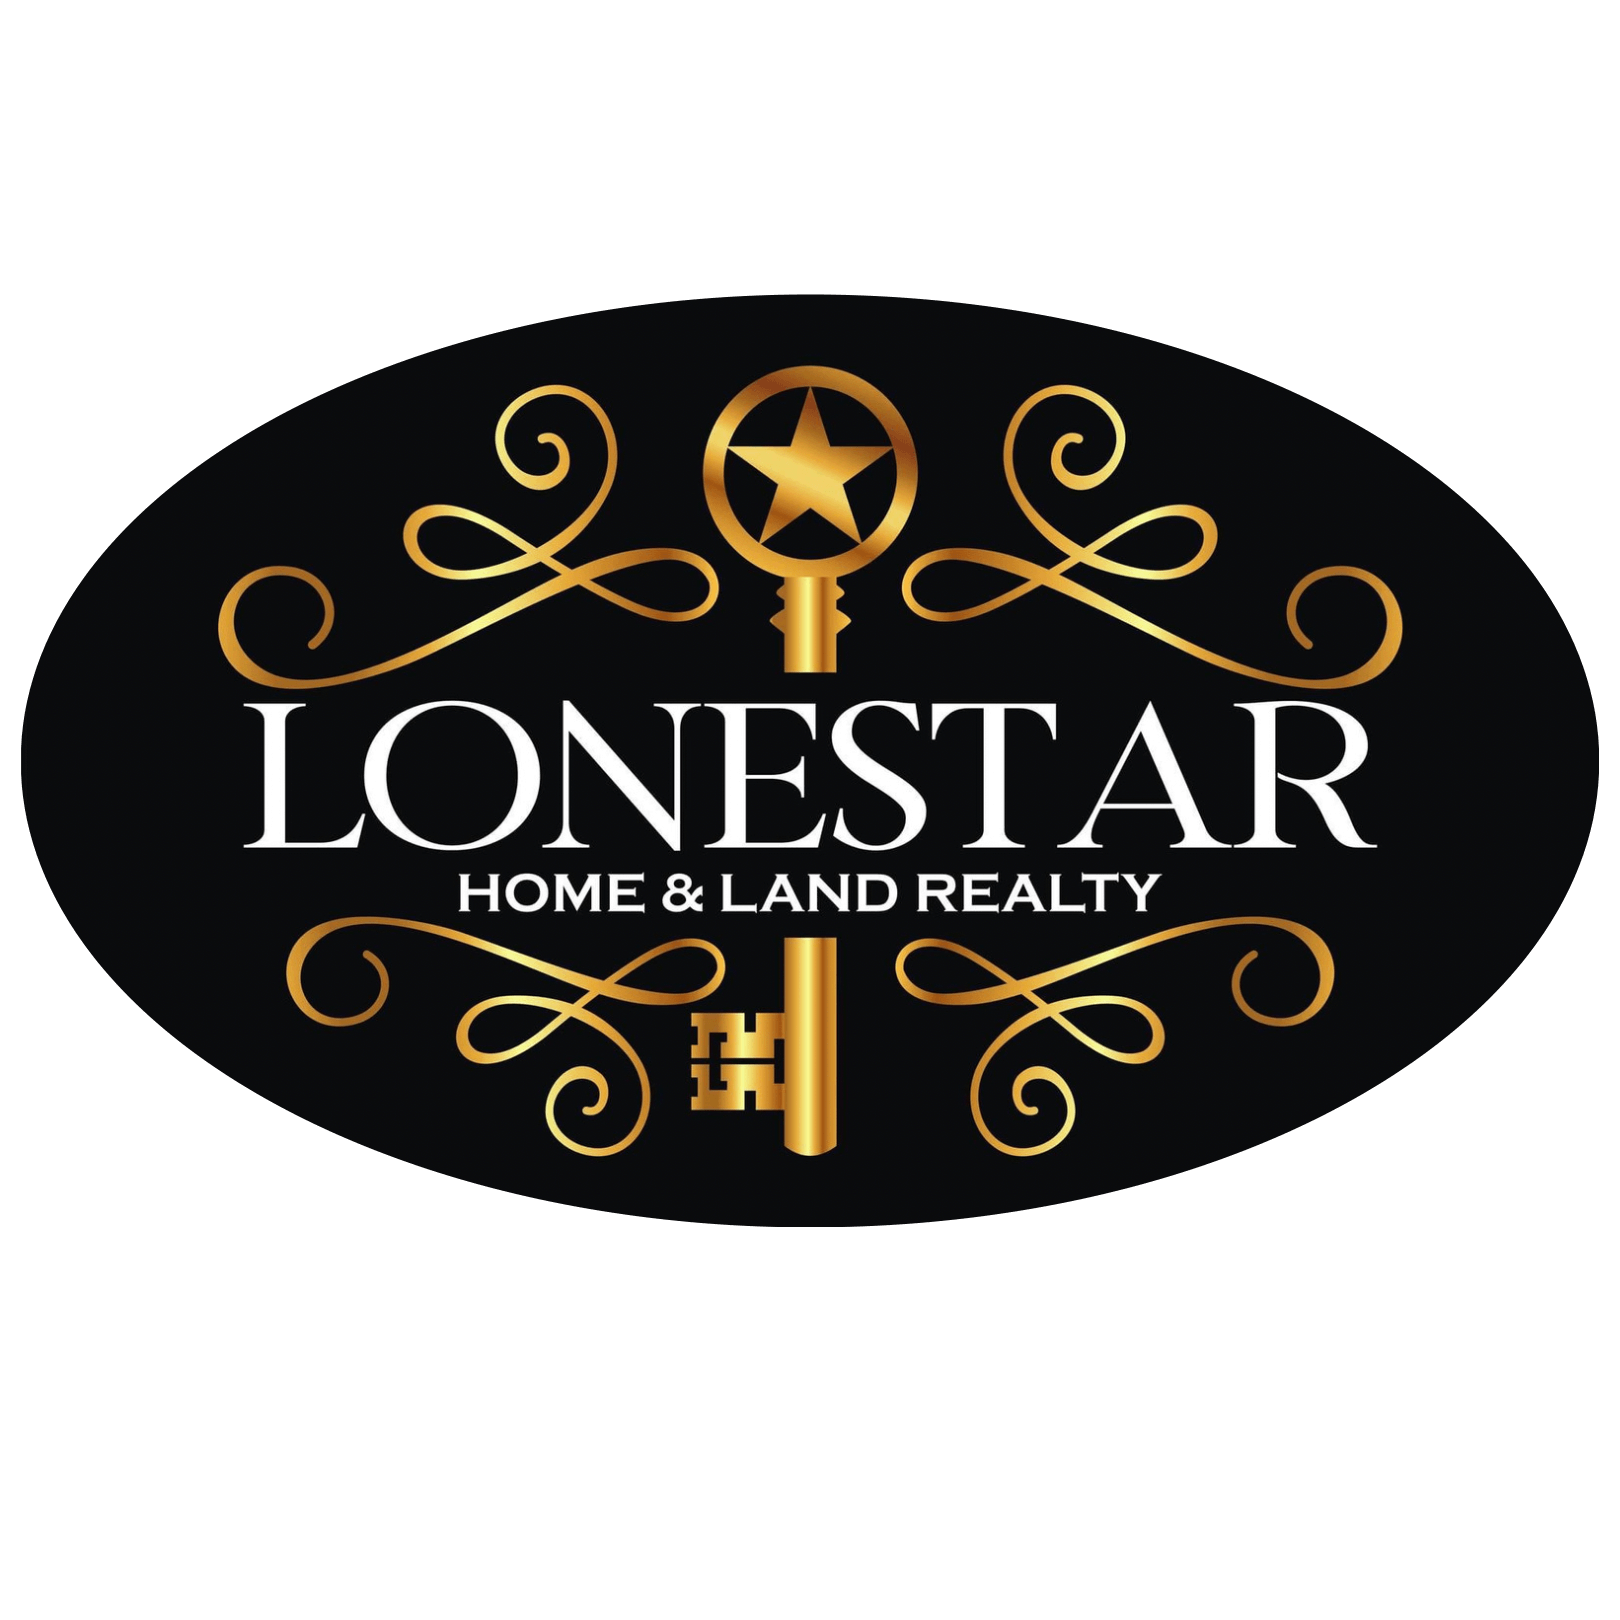 Lonestar Home & Land Reality